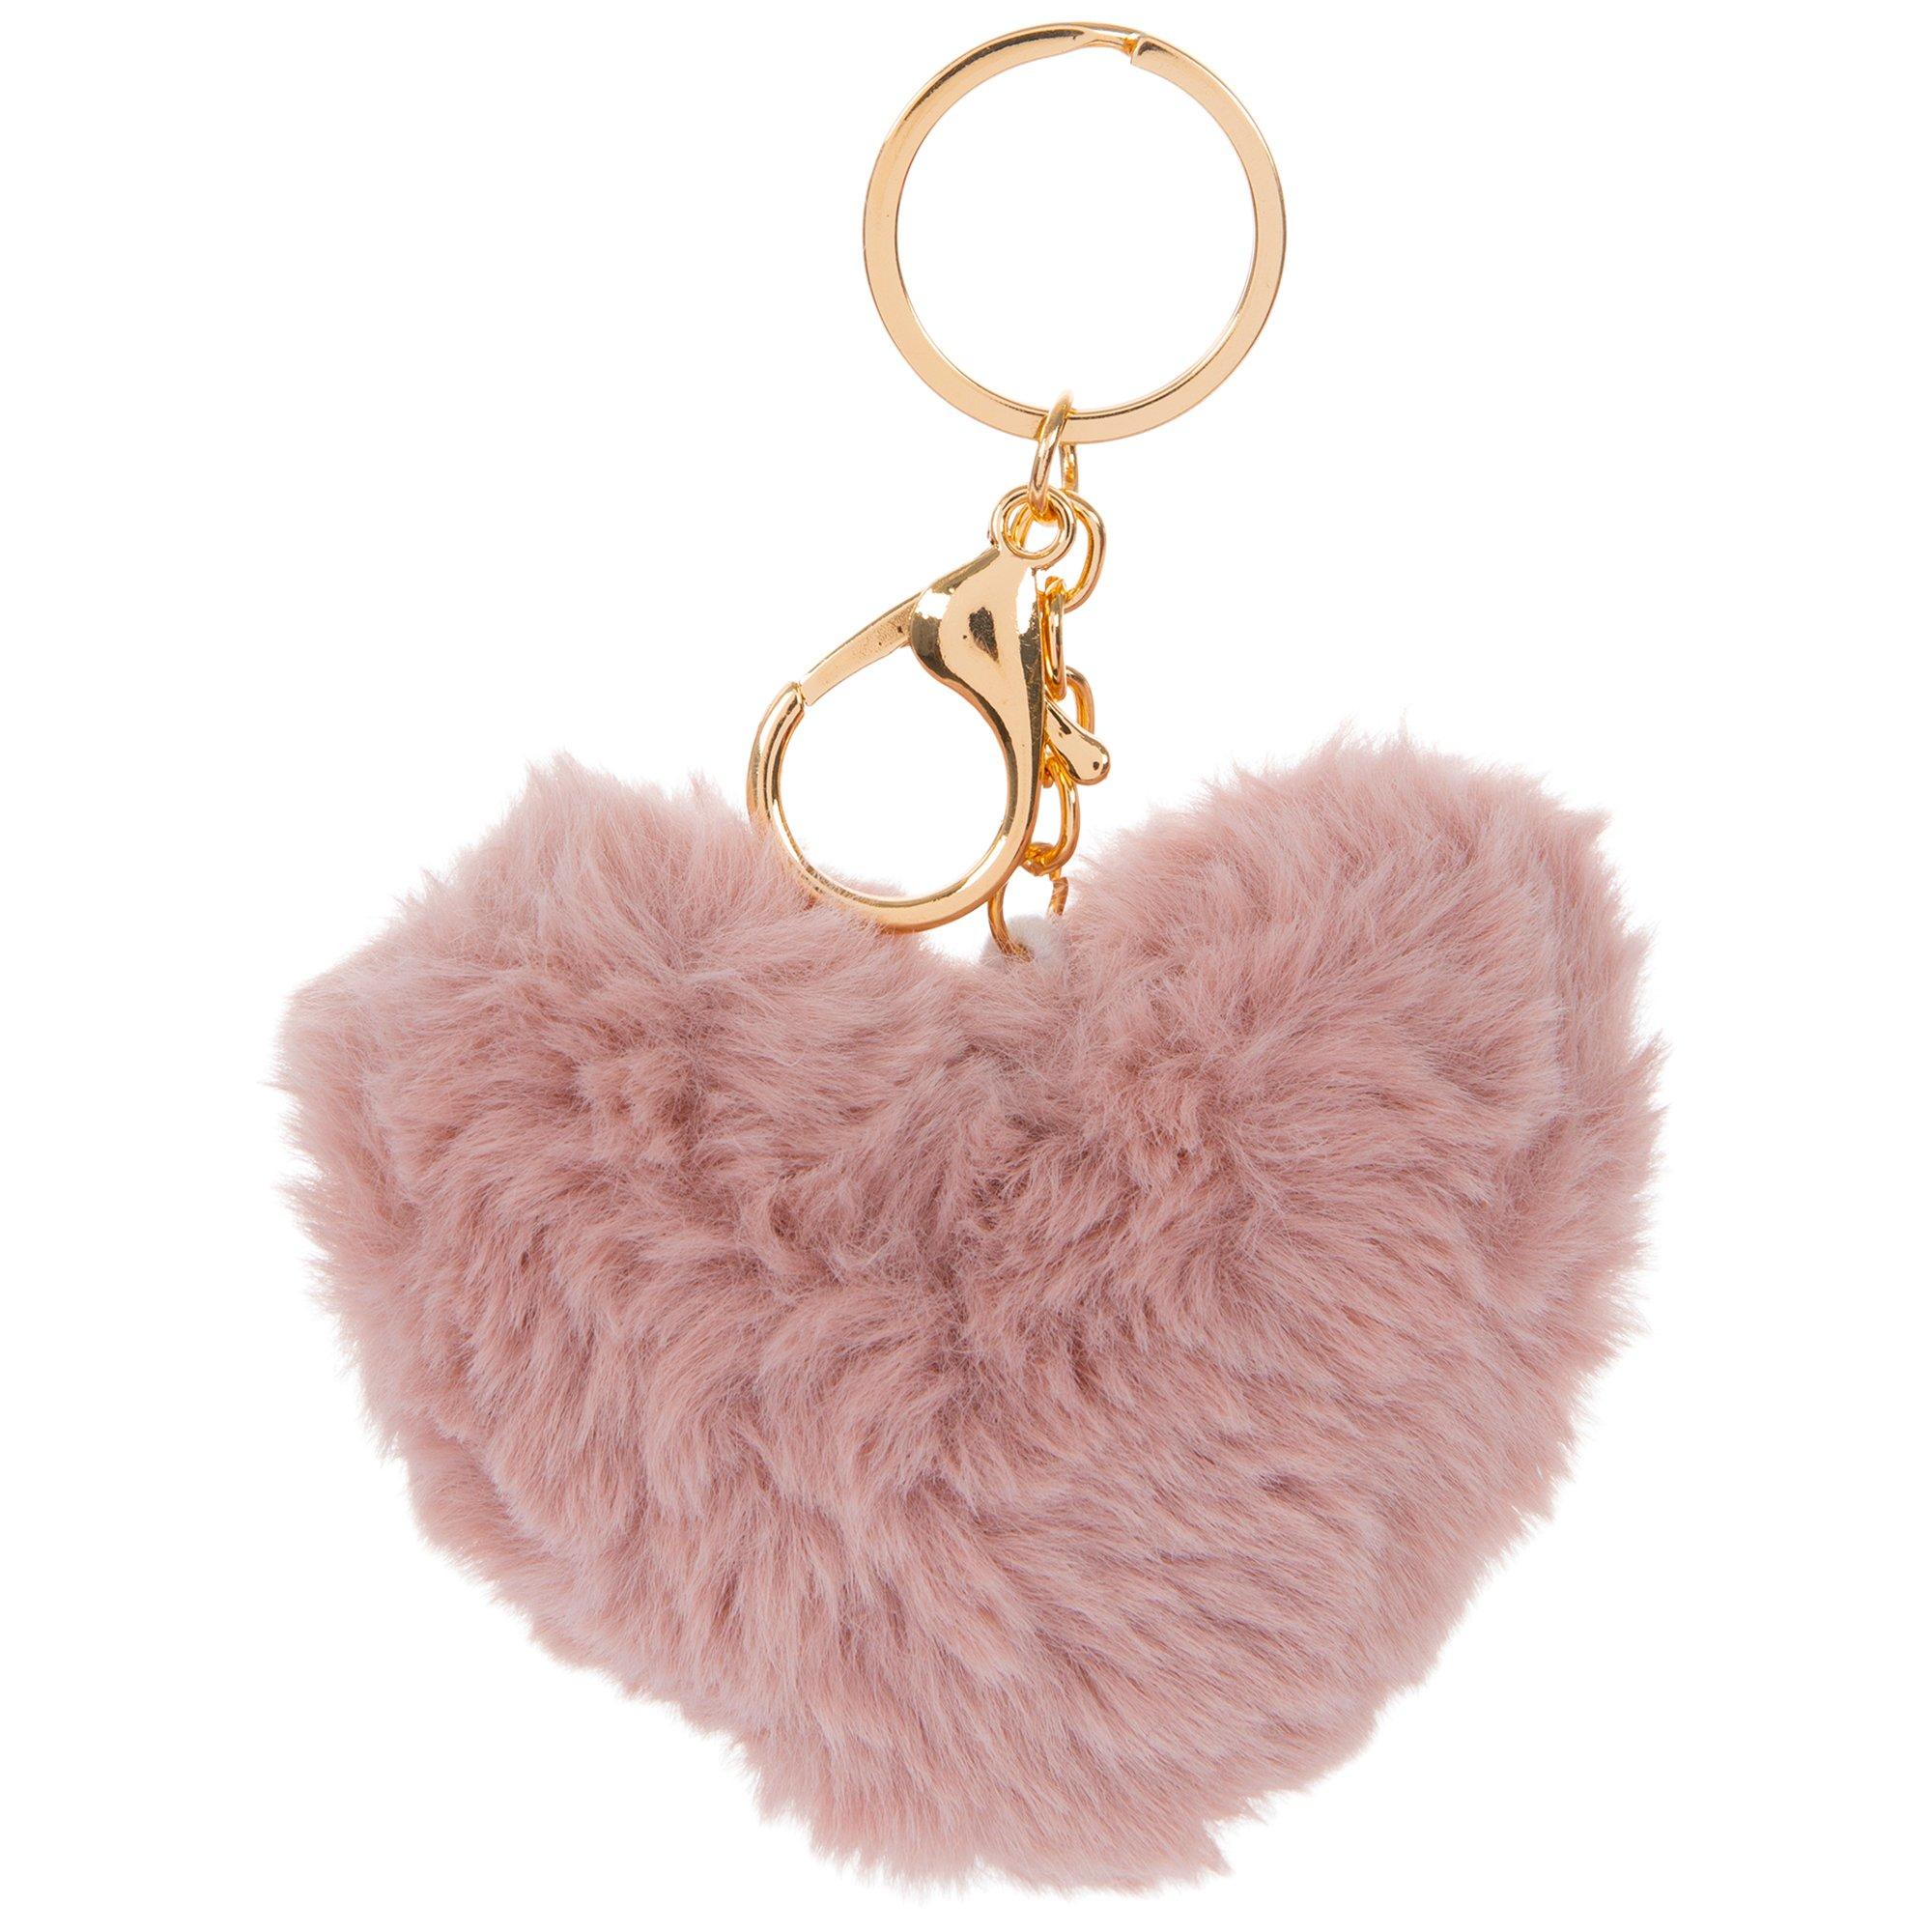 Red Heart Clasp Keychain, Hobby Lobby